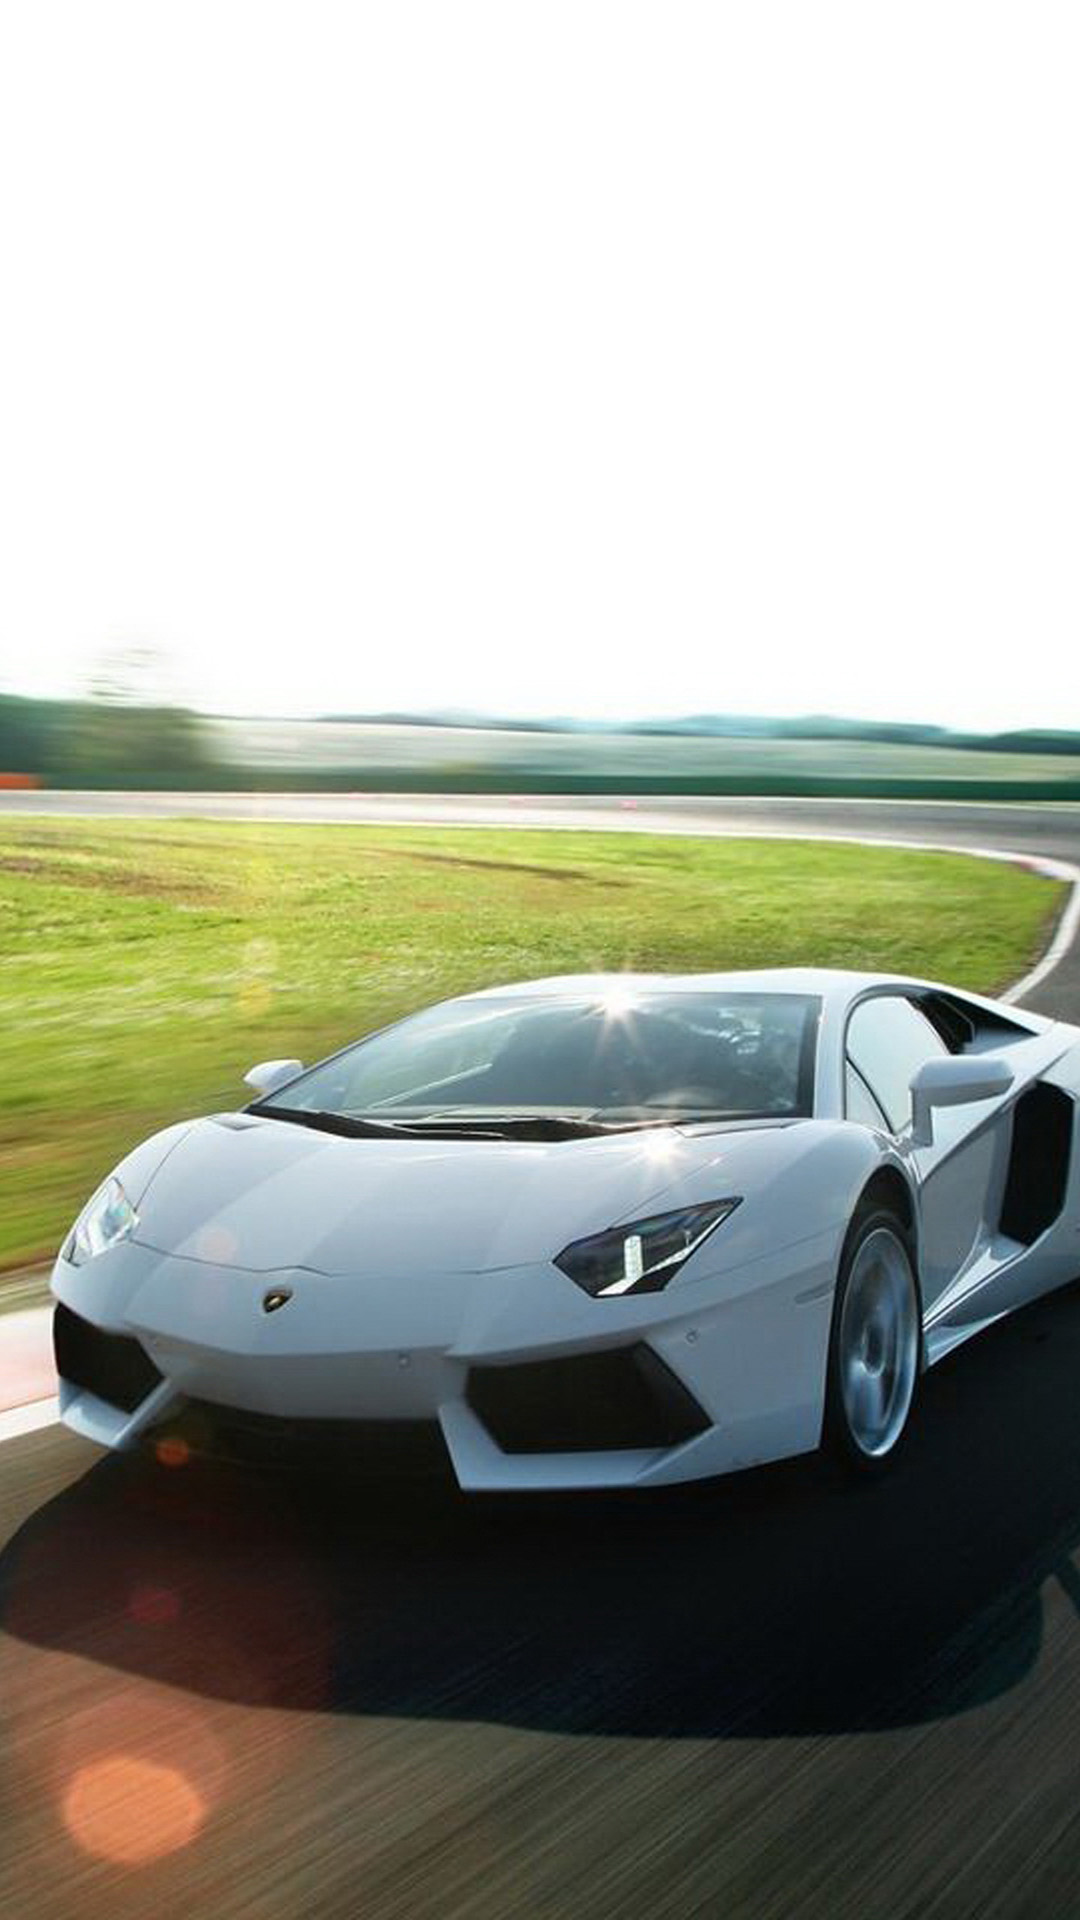 Download Lamborghini Wallpaper Hd For Android | wallpaper ...